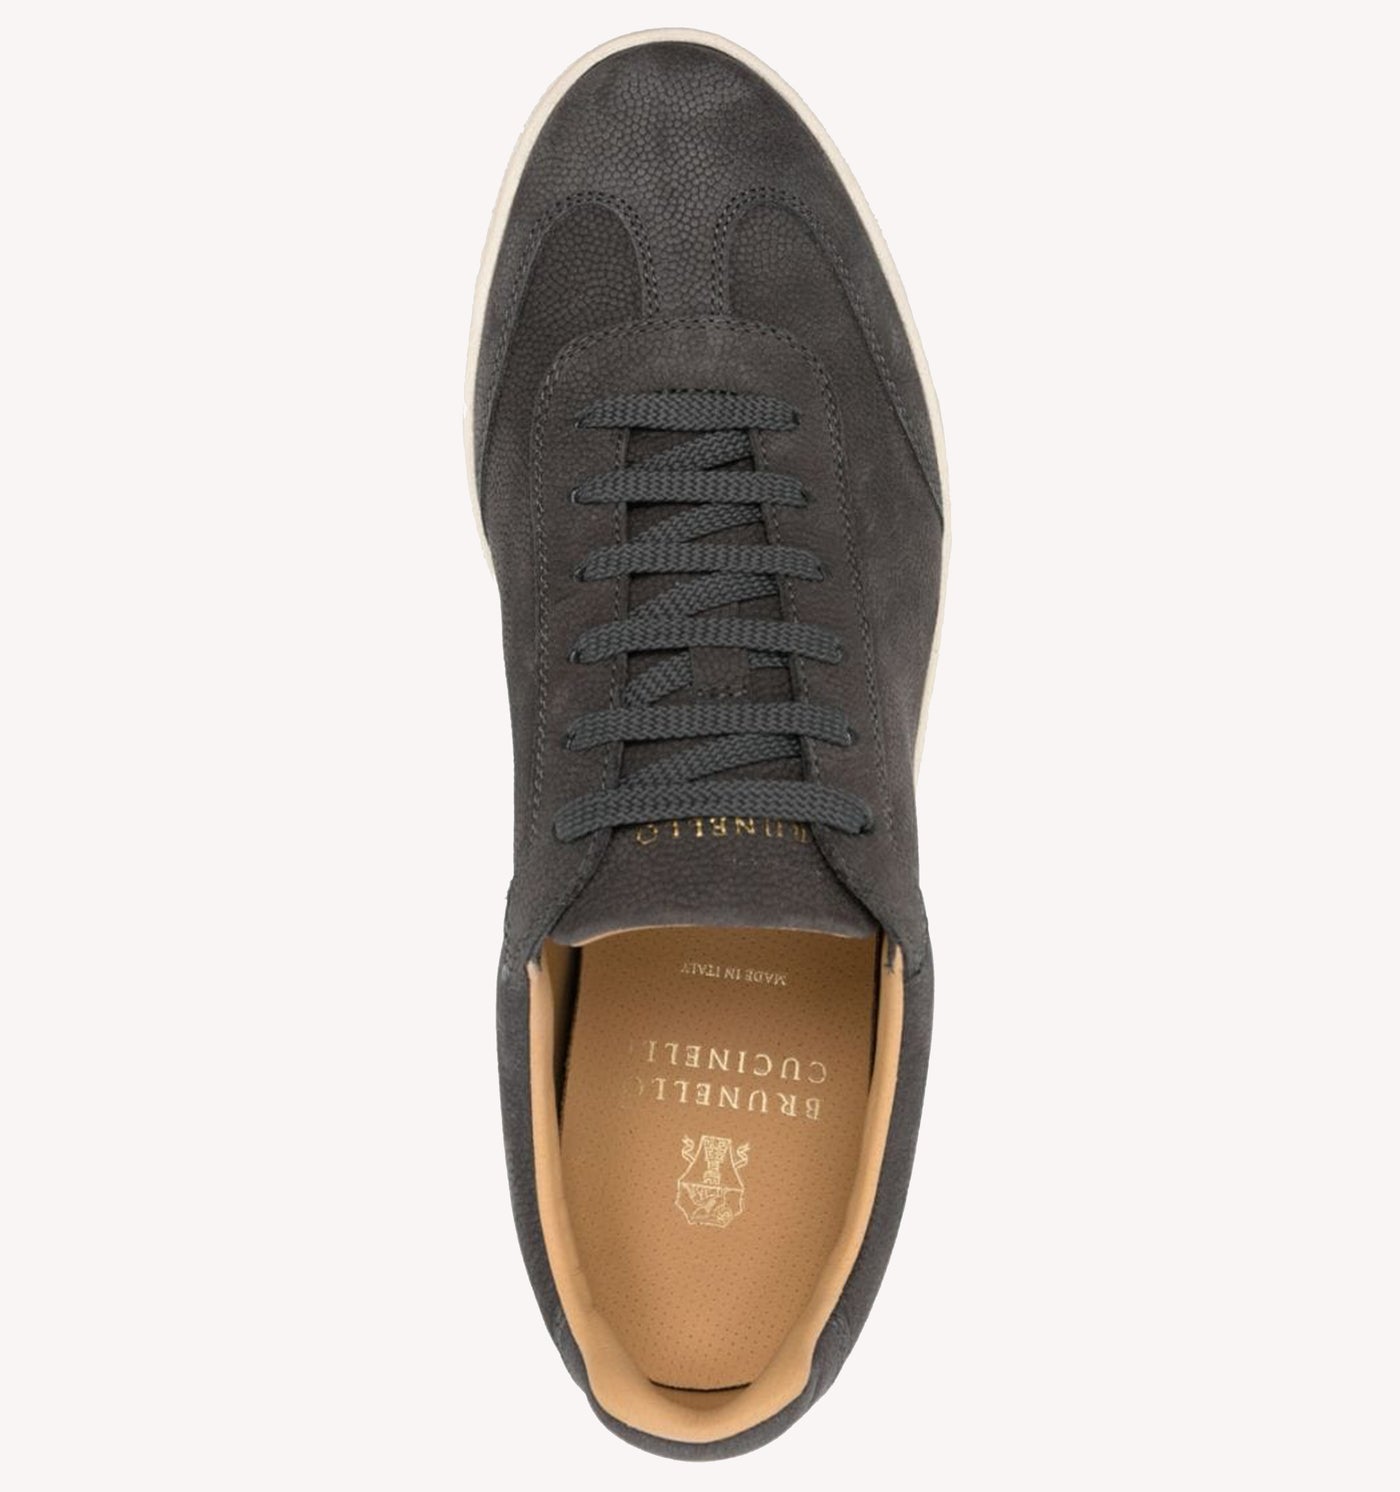 Brunello Cucinelli Pebbled Sneaker in Dark Grey